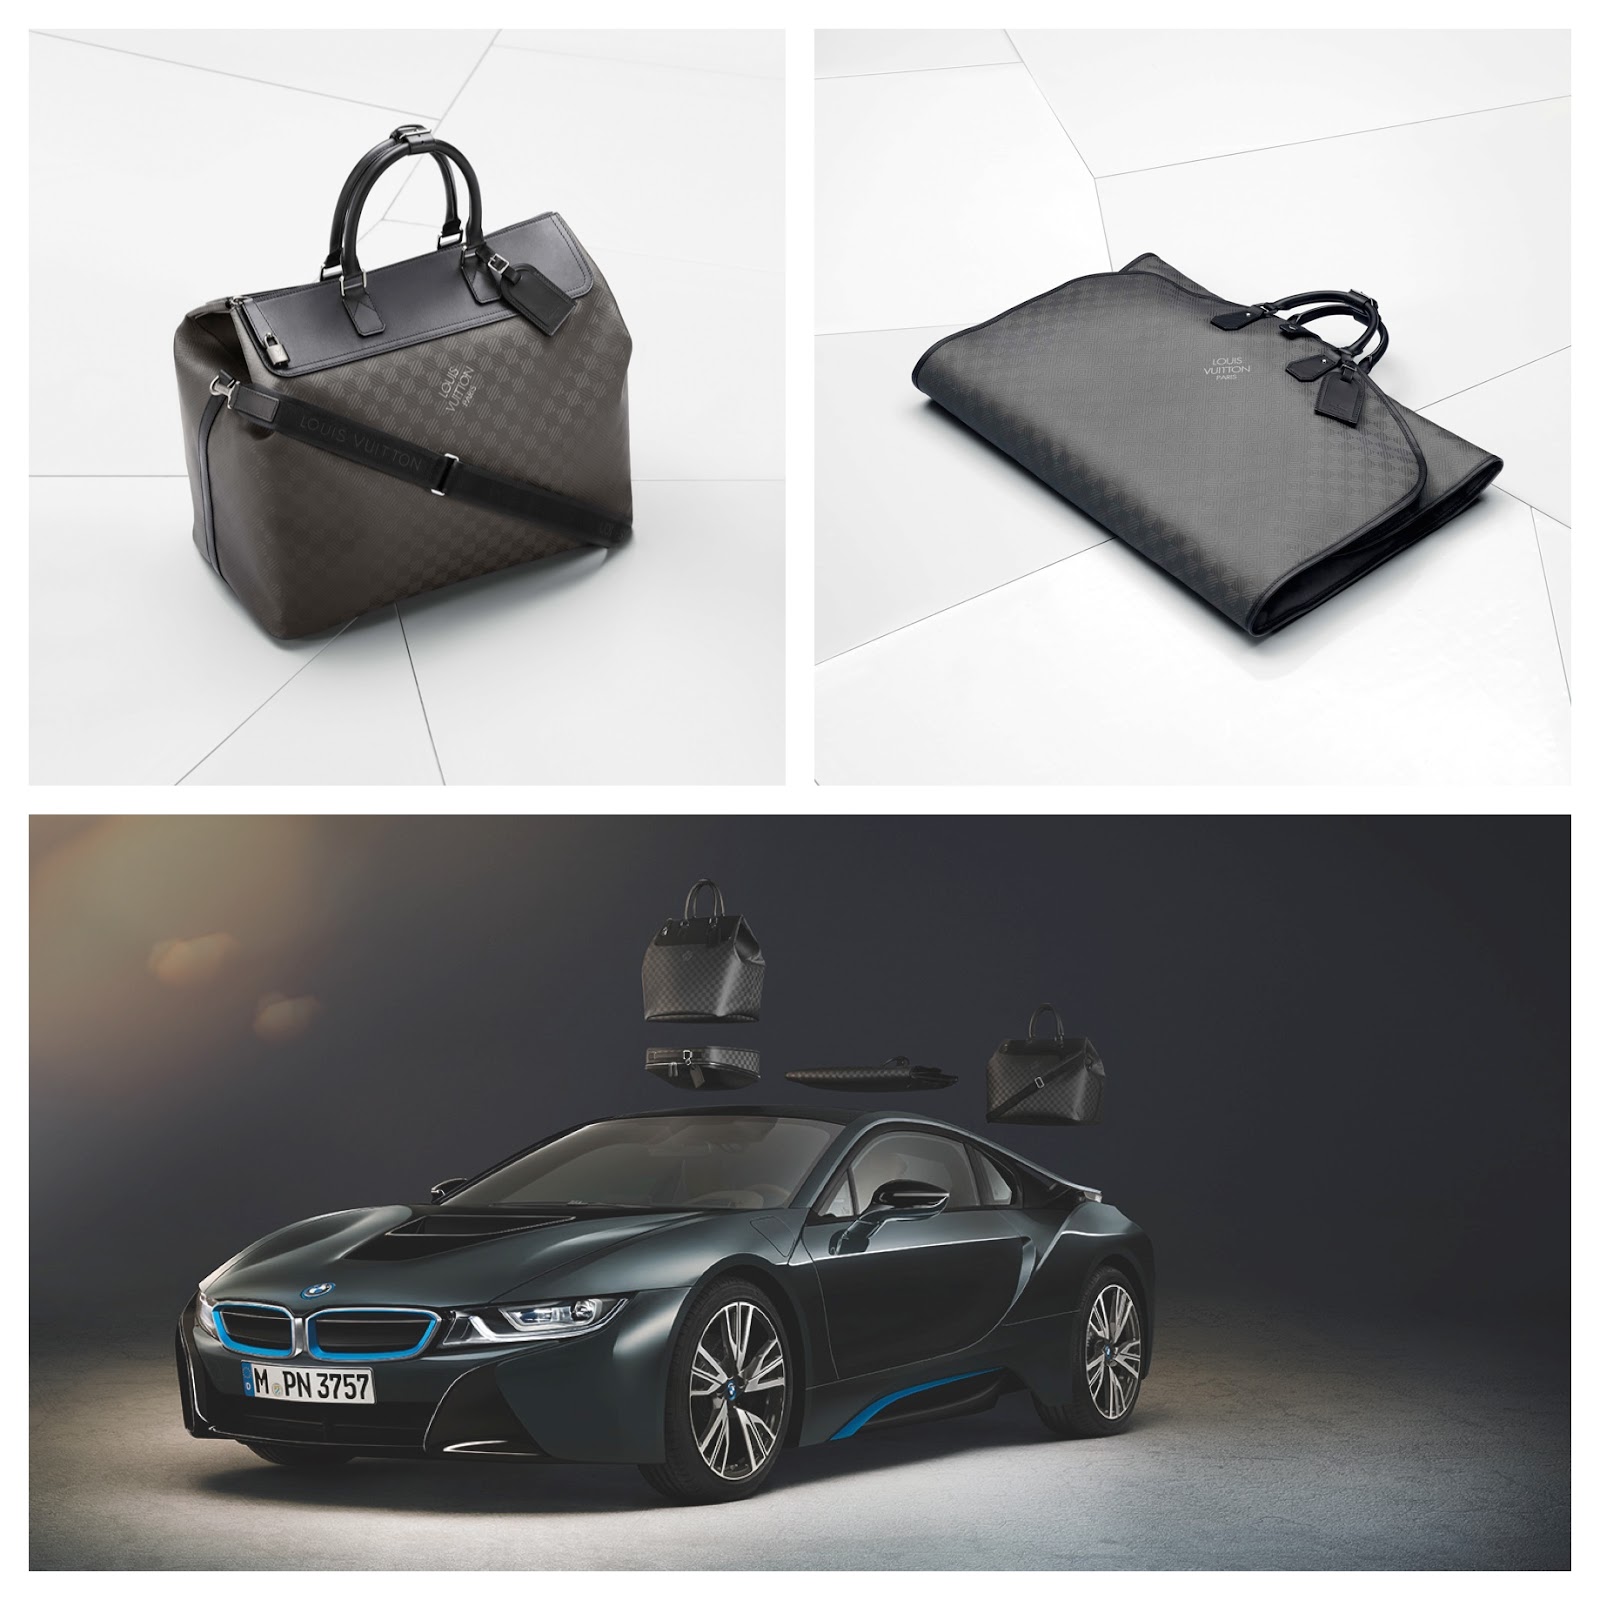 Louis Vuitton Carbon Fiber Bags Match New BMW i8